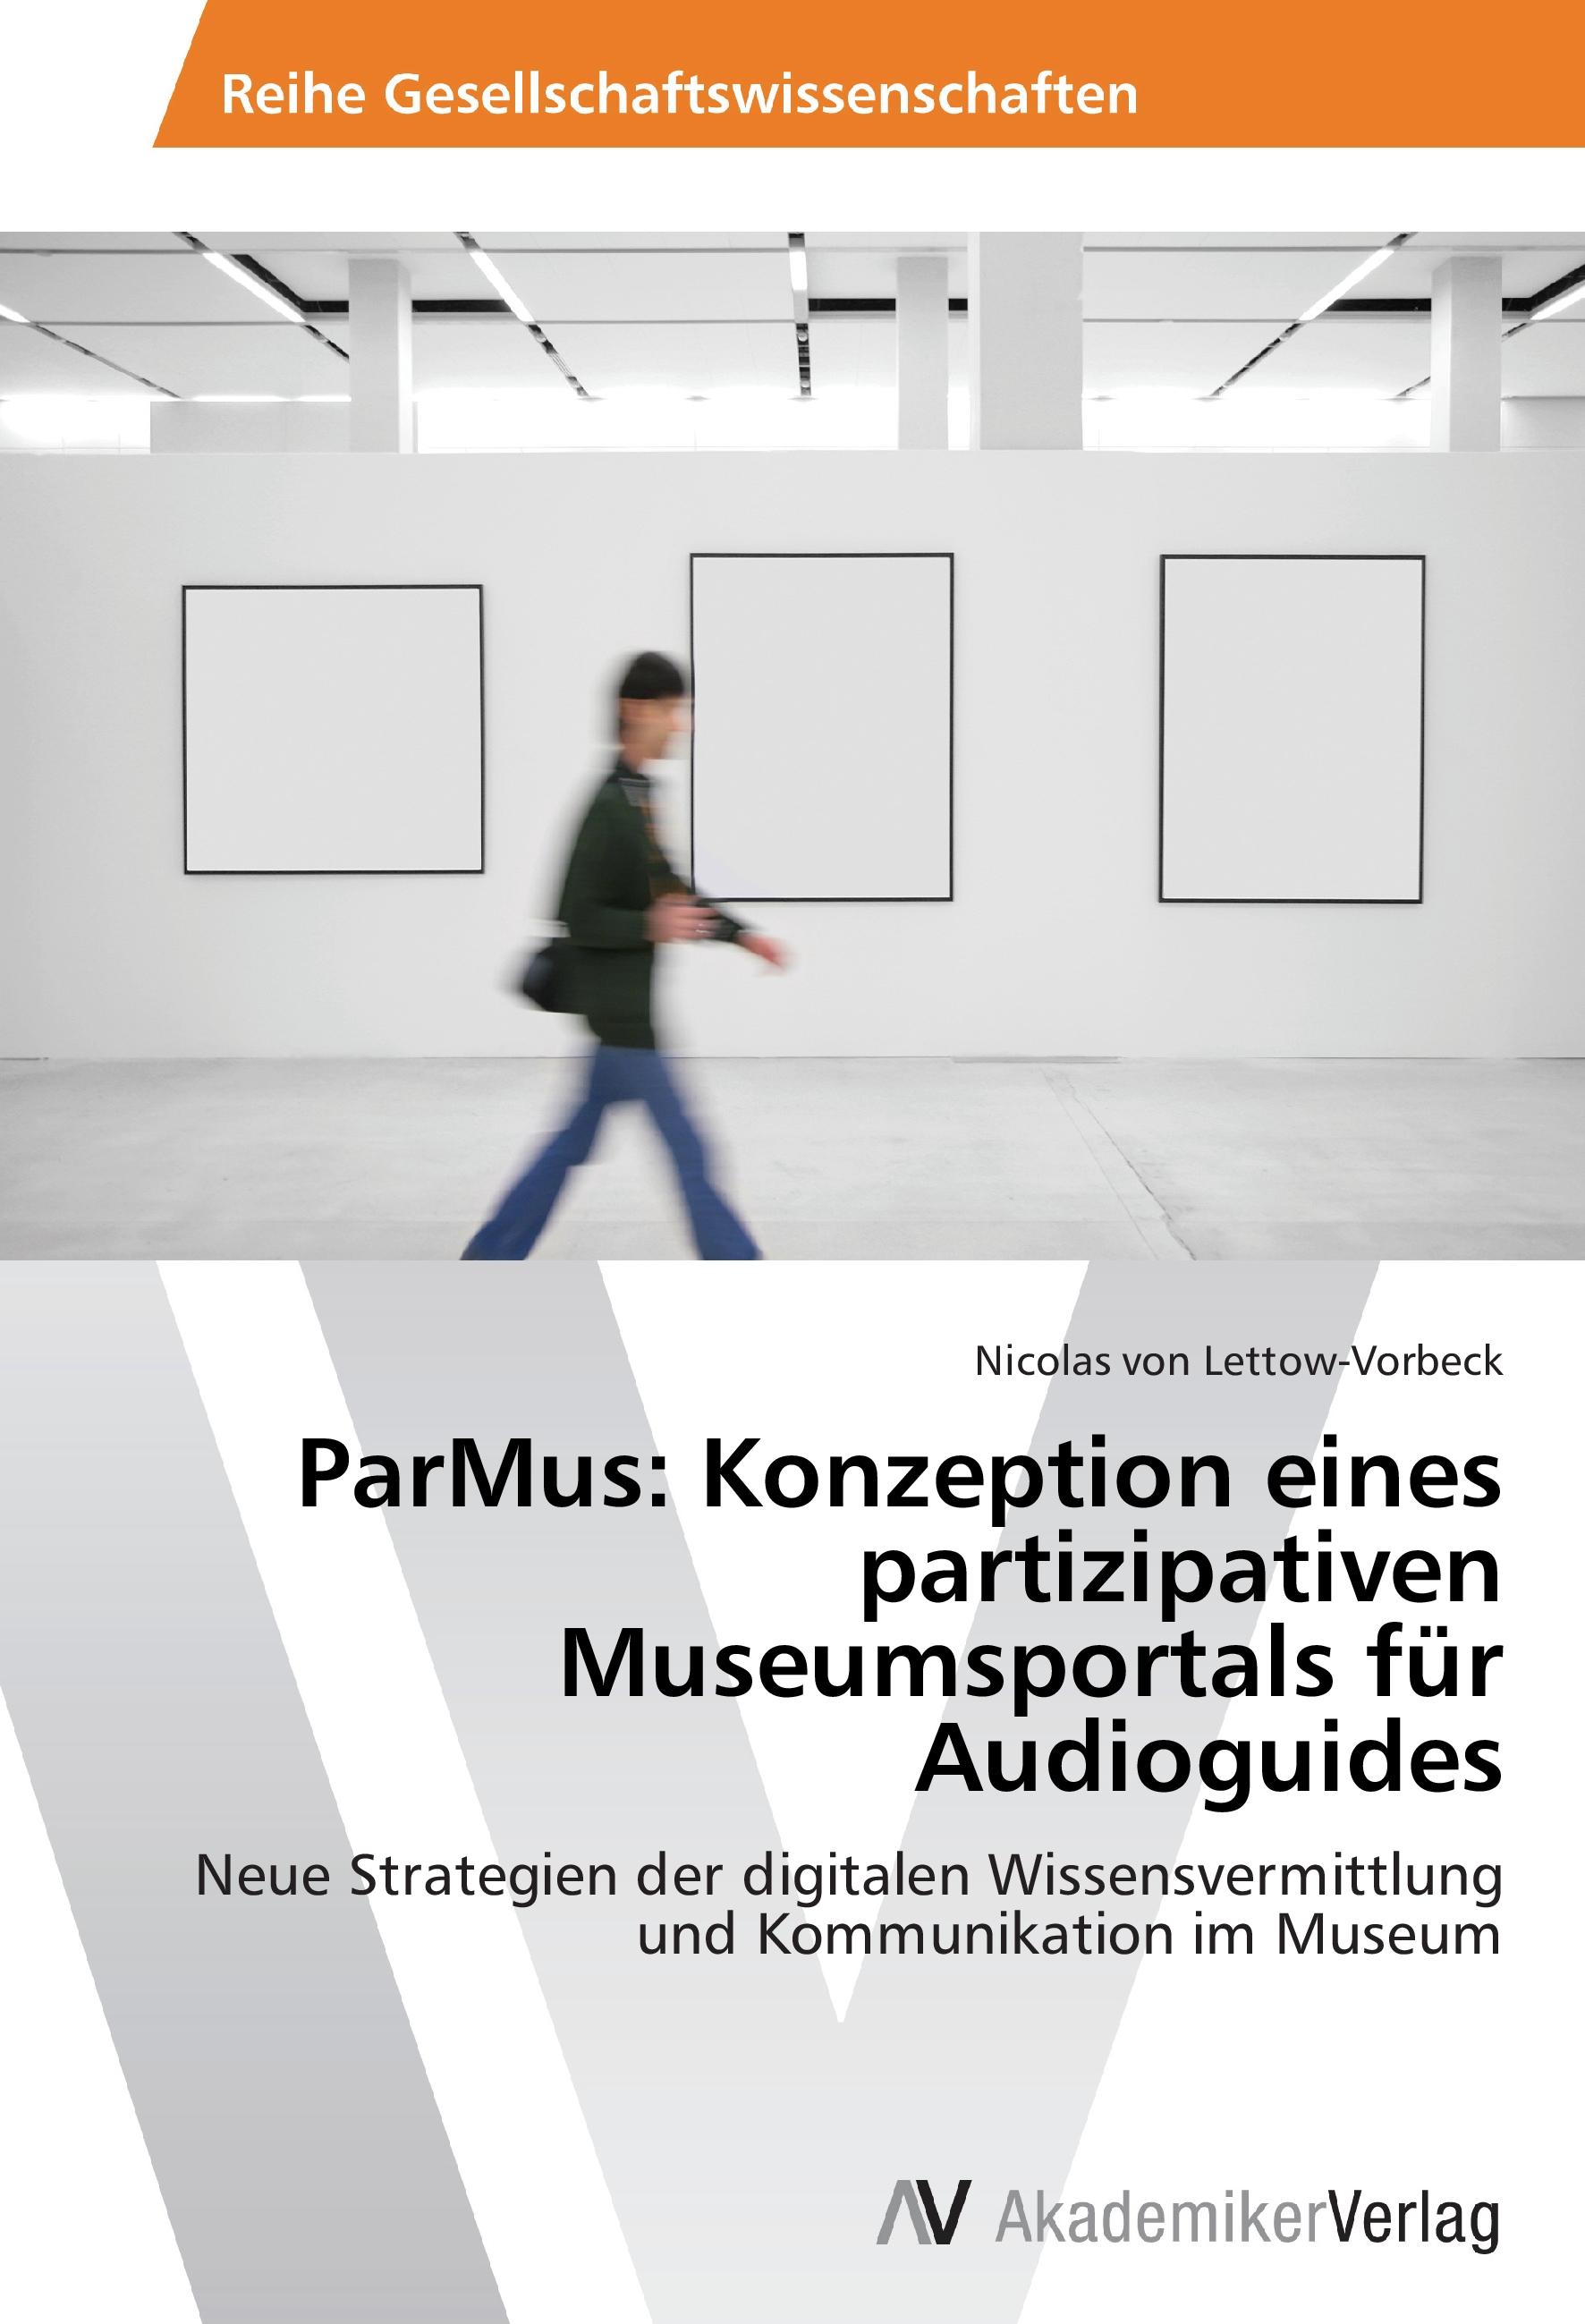 ParMus: Konzeption eines partizipativen Museumsportals fuer Audioguides - Nicolas von Lettow-Vorbeck